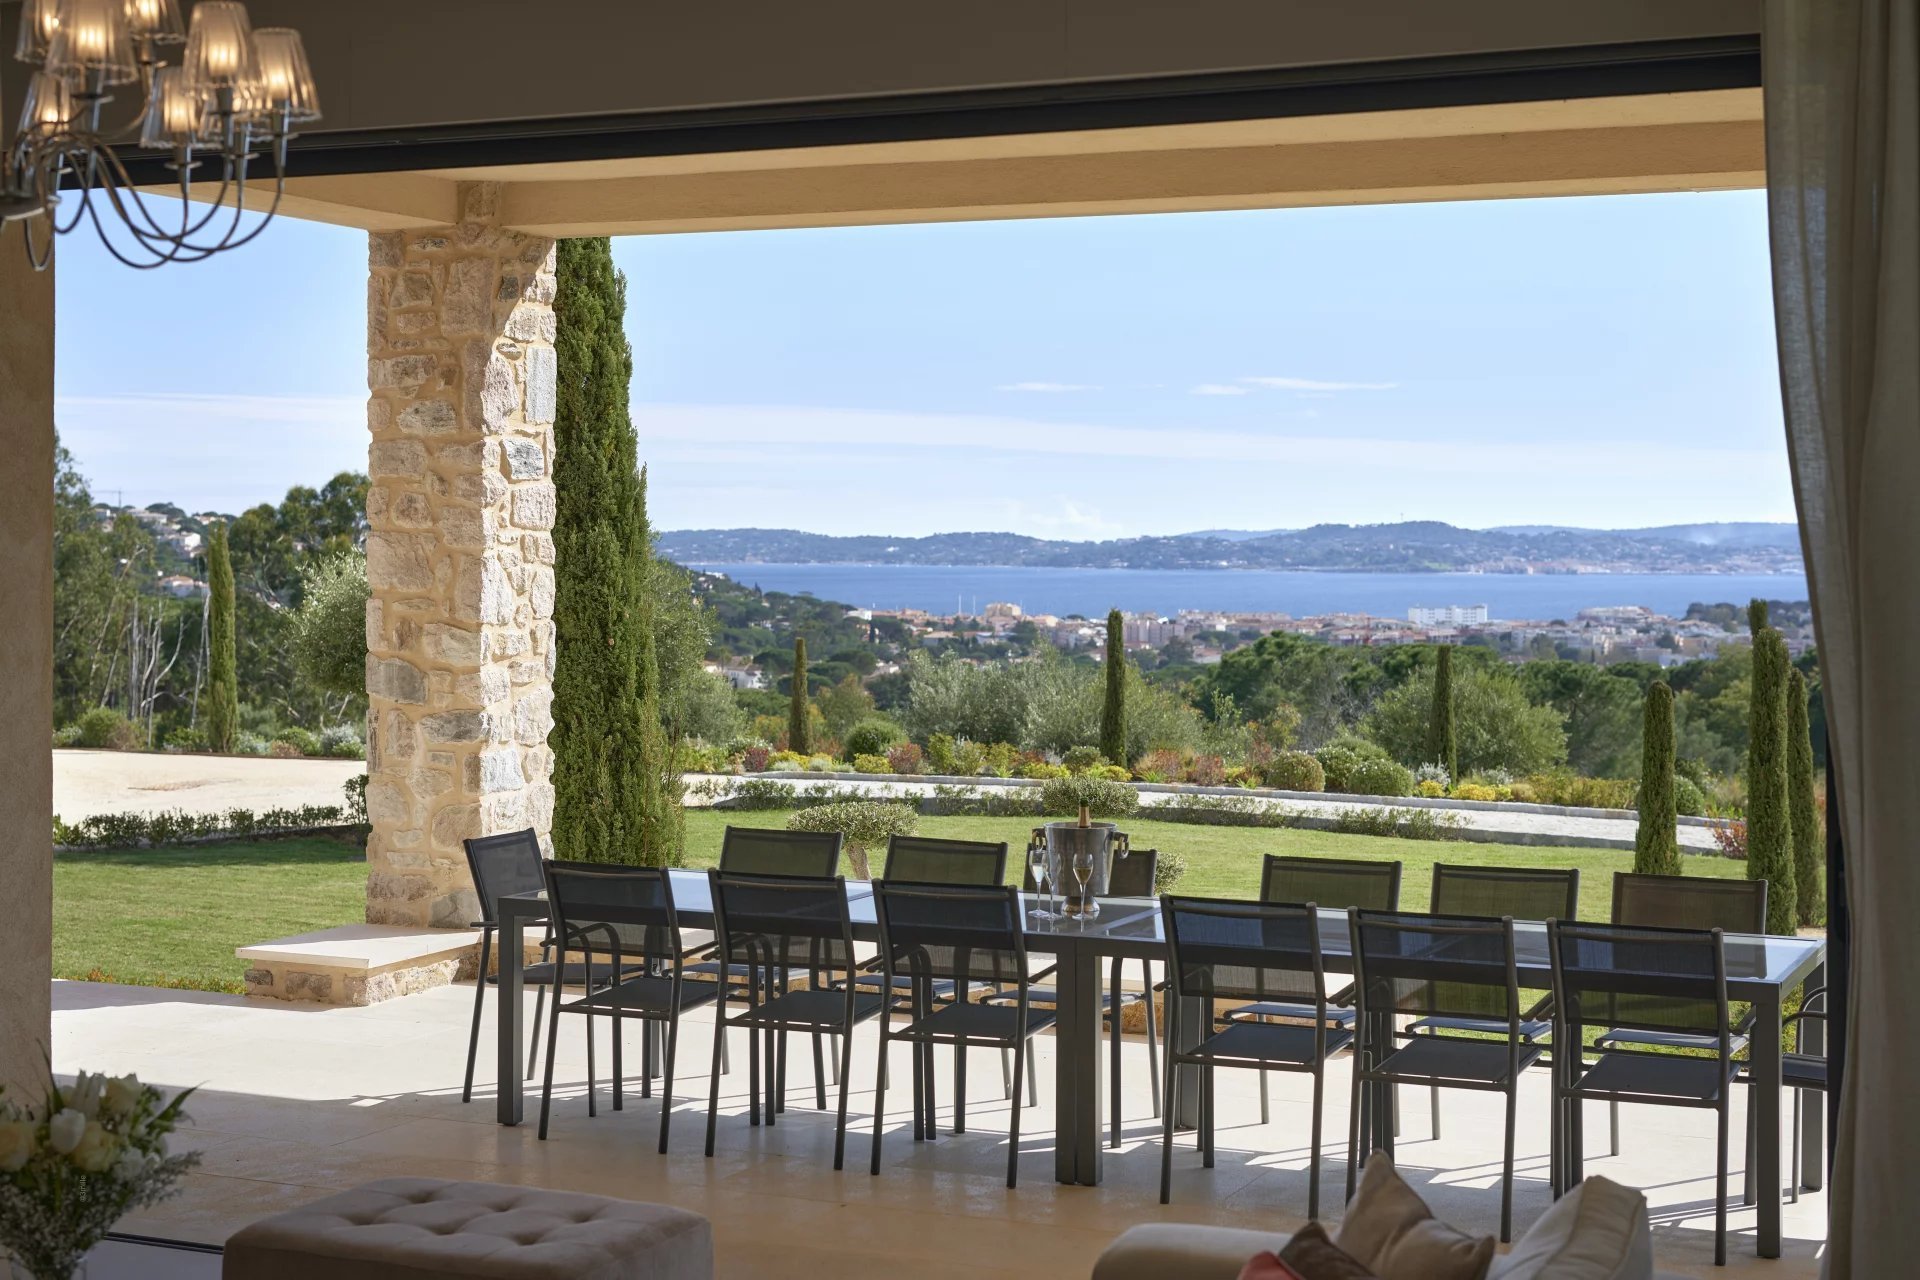 Francis York Luxury Villa Overlooking the Bay of Saint Tropez, French Riviera 7.jpg